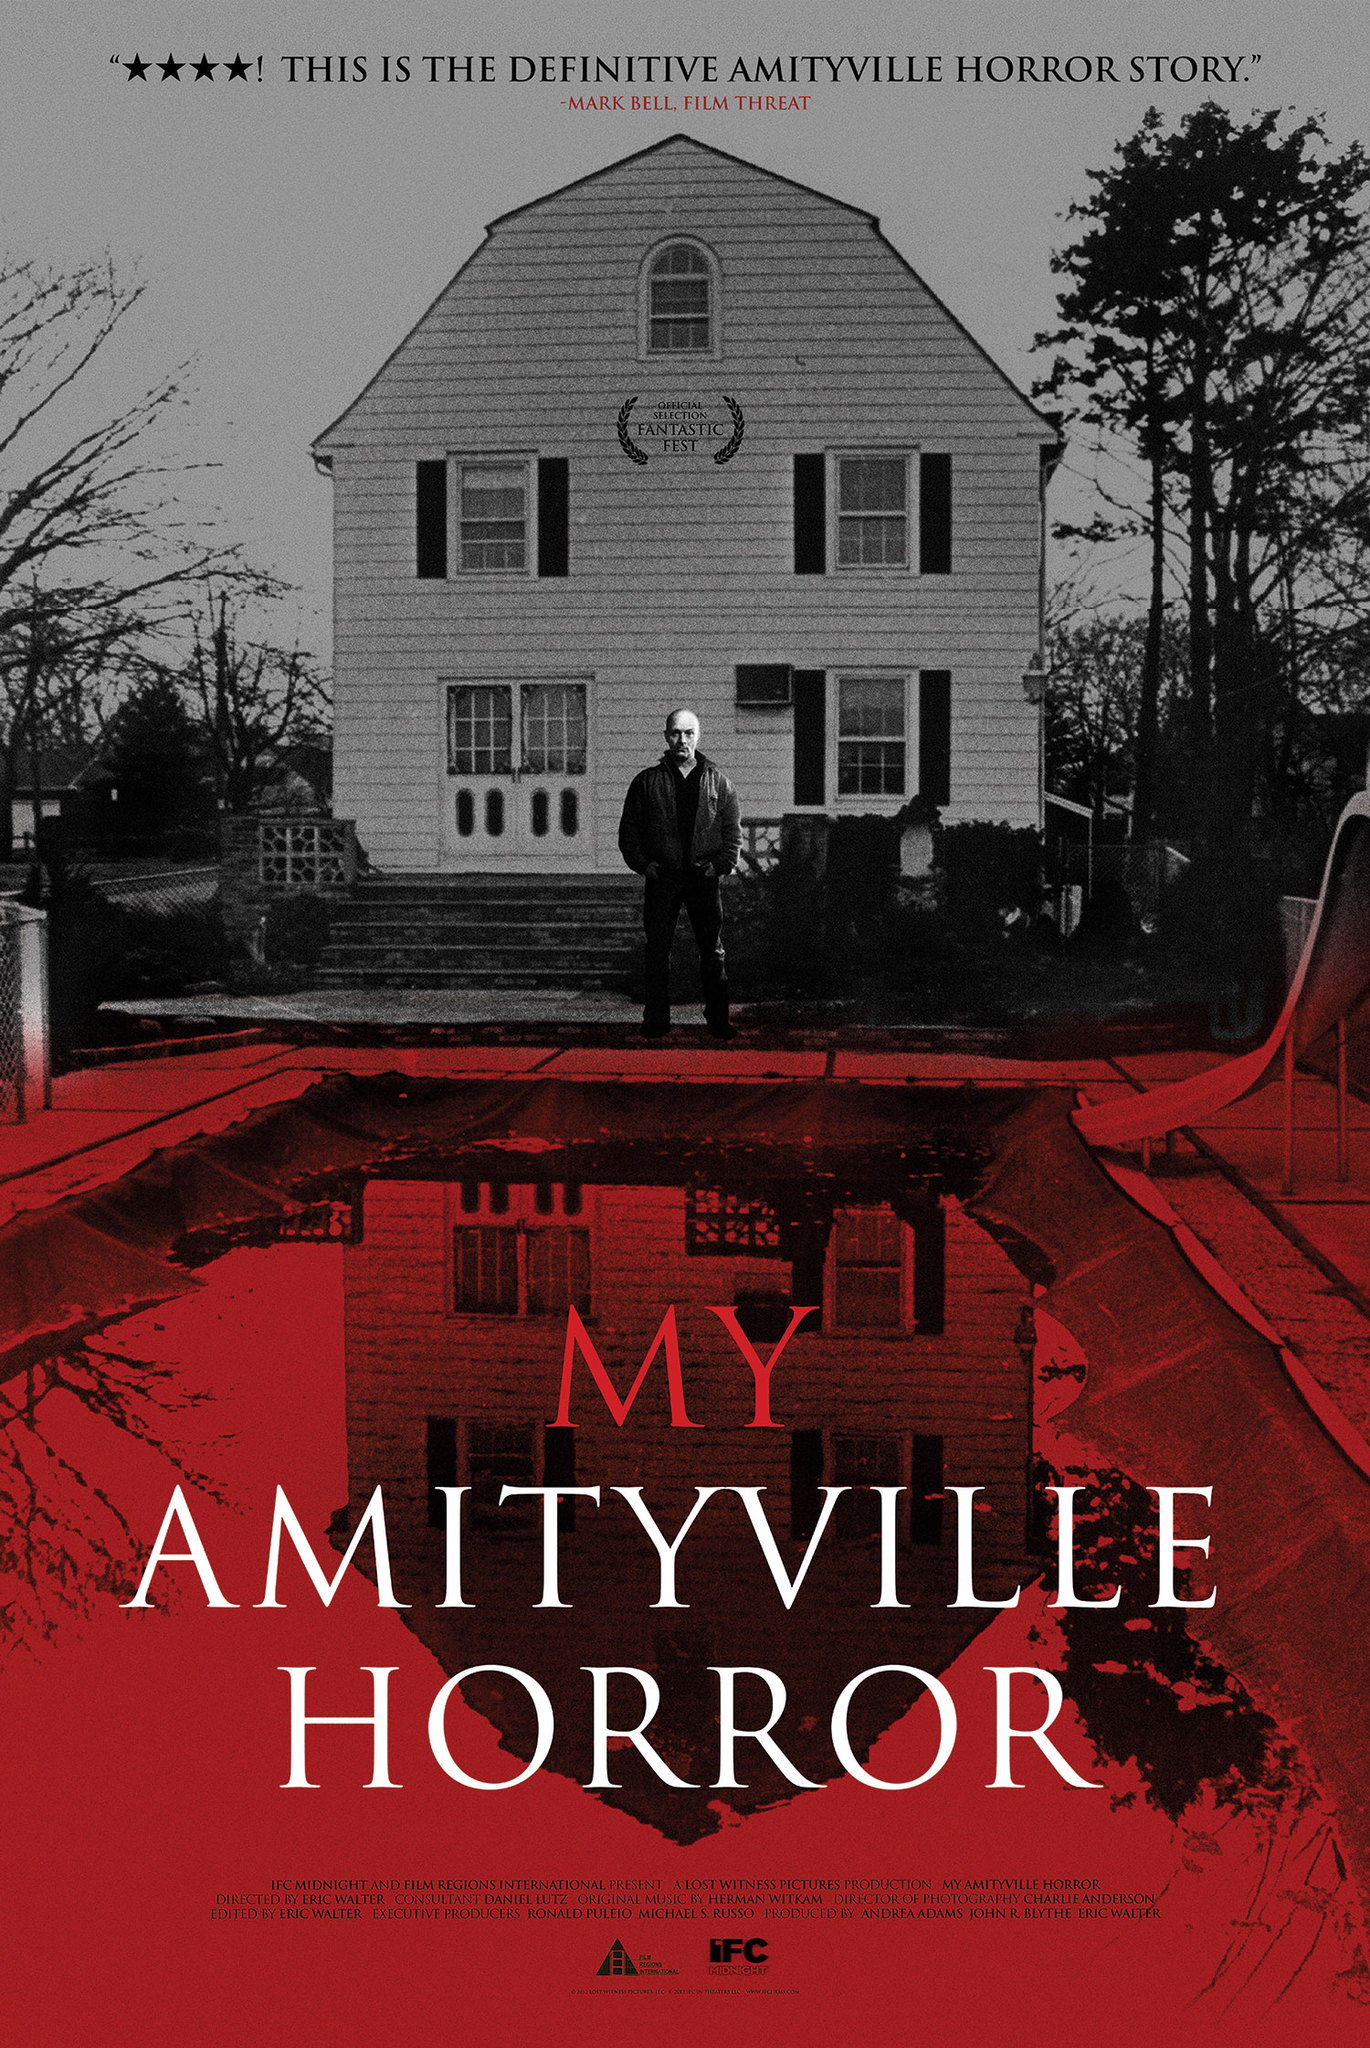 My Amityville Horror (2012) starring Daniel Lutz on DVD on DVD